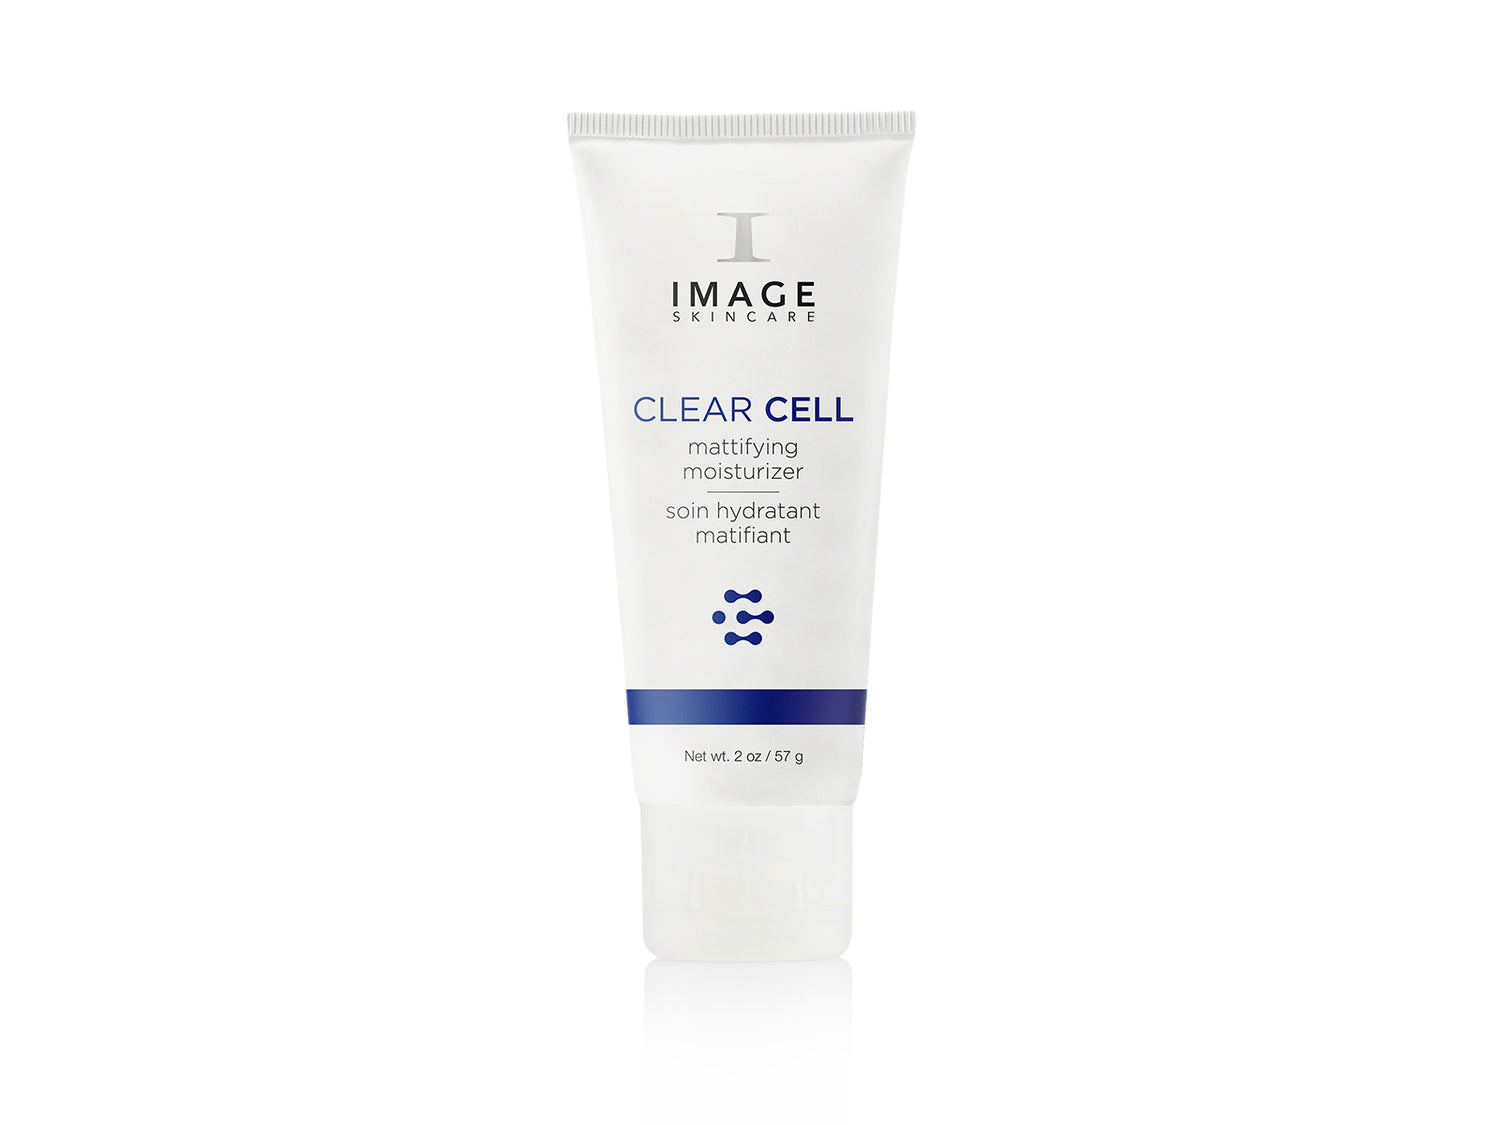 Clear cell mattifying moisturizer